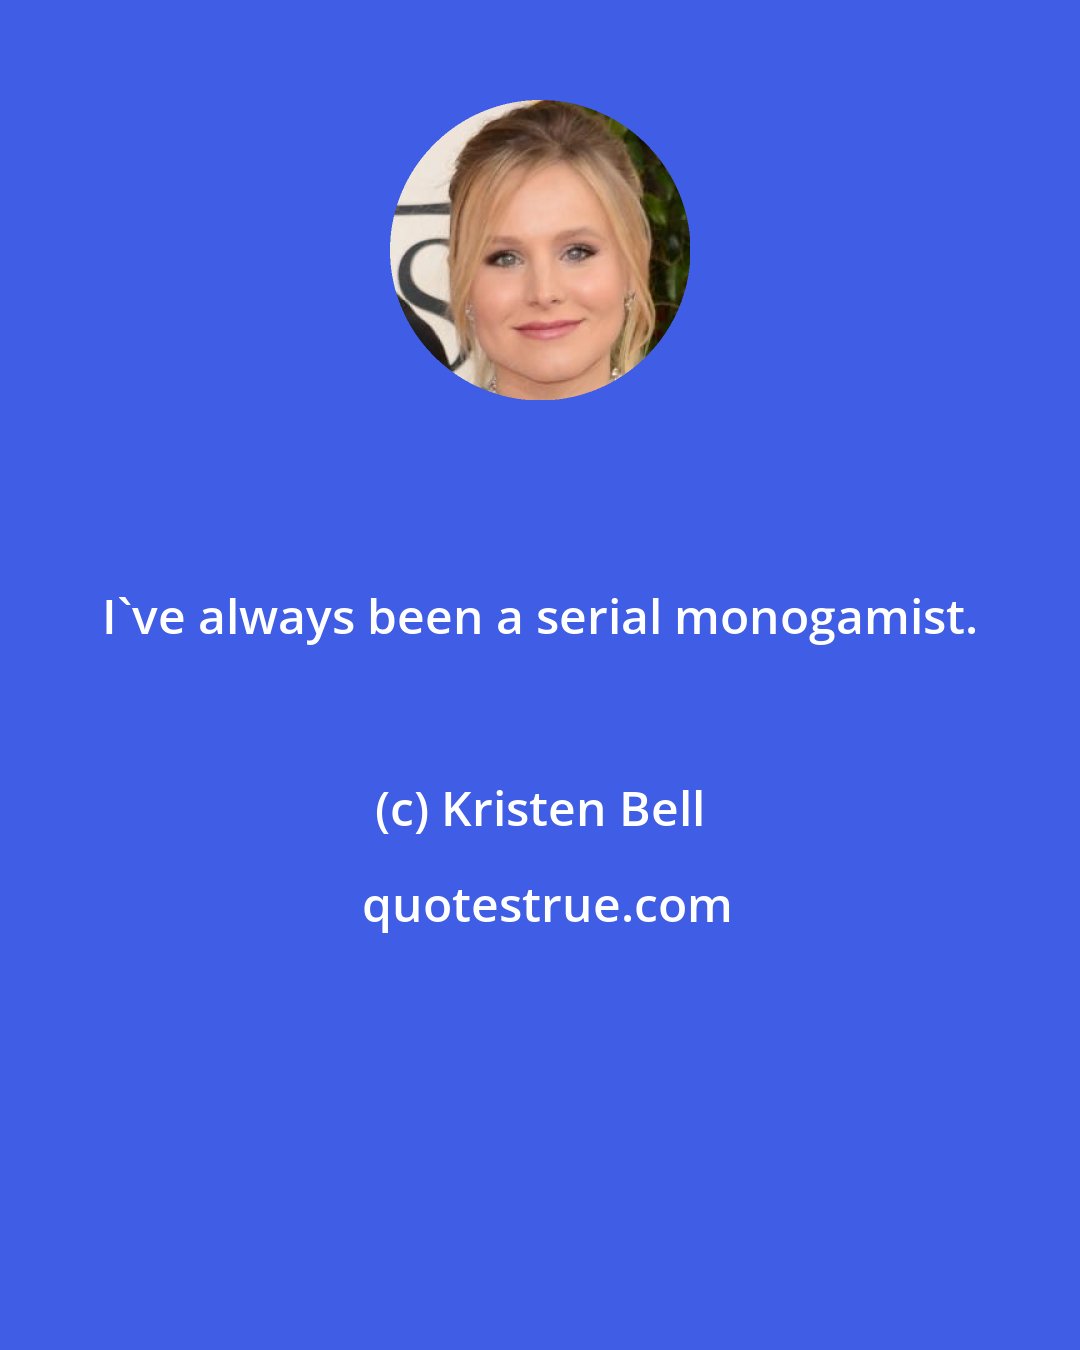 Kristen Bell: I've always been a serial monogamist.